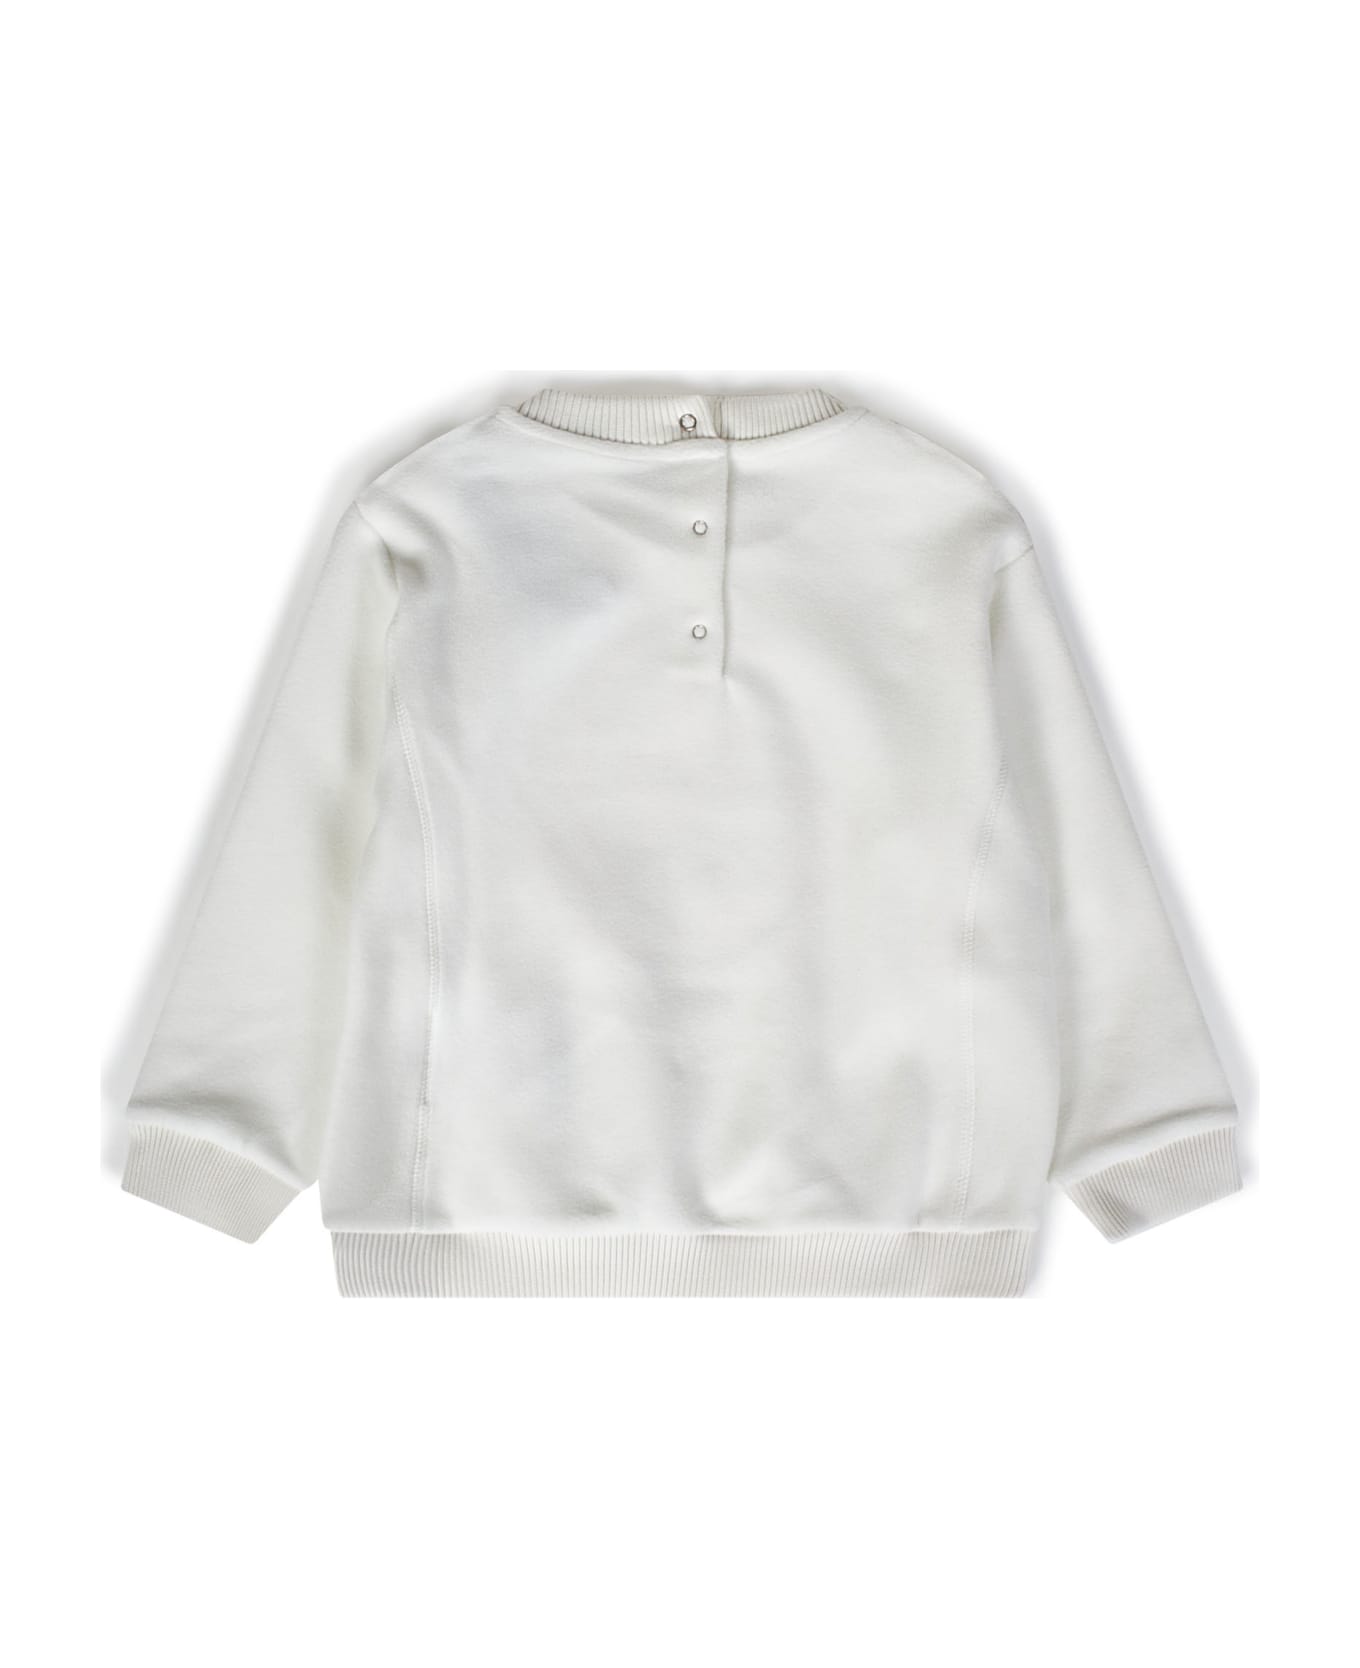 Moncler Enfant Sweatshirt - White